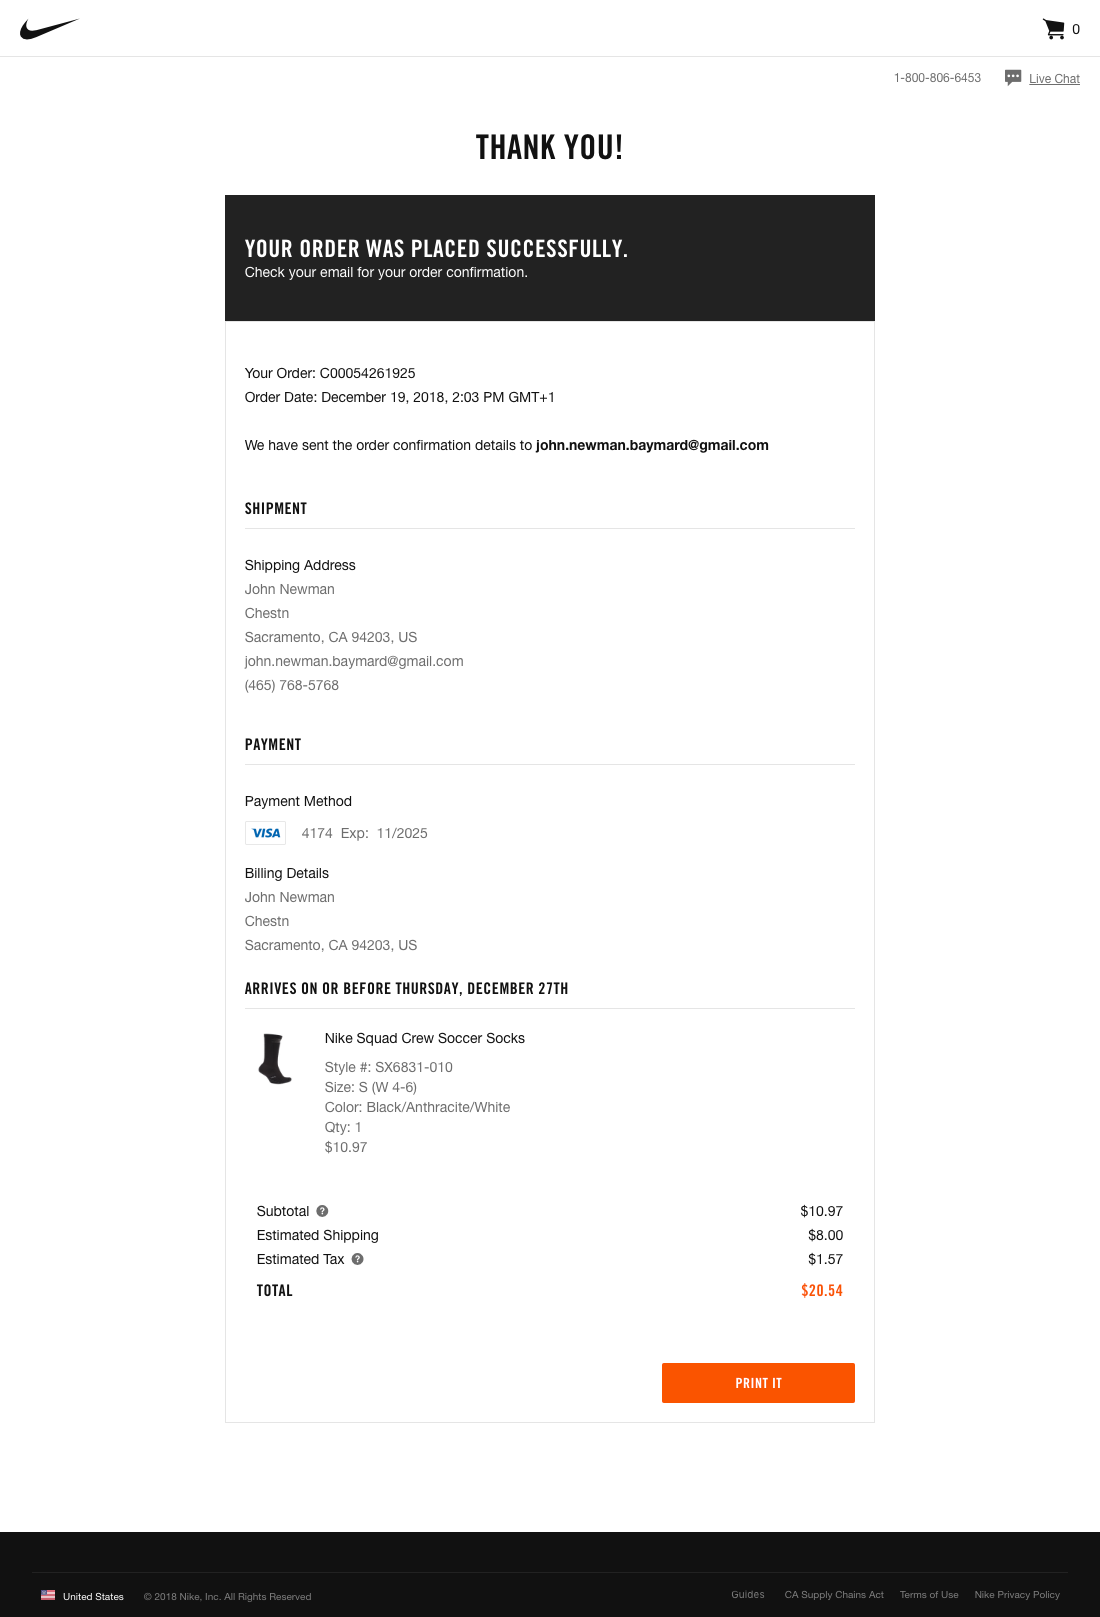 Nike's Receipt / Order Confirmation 